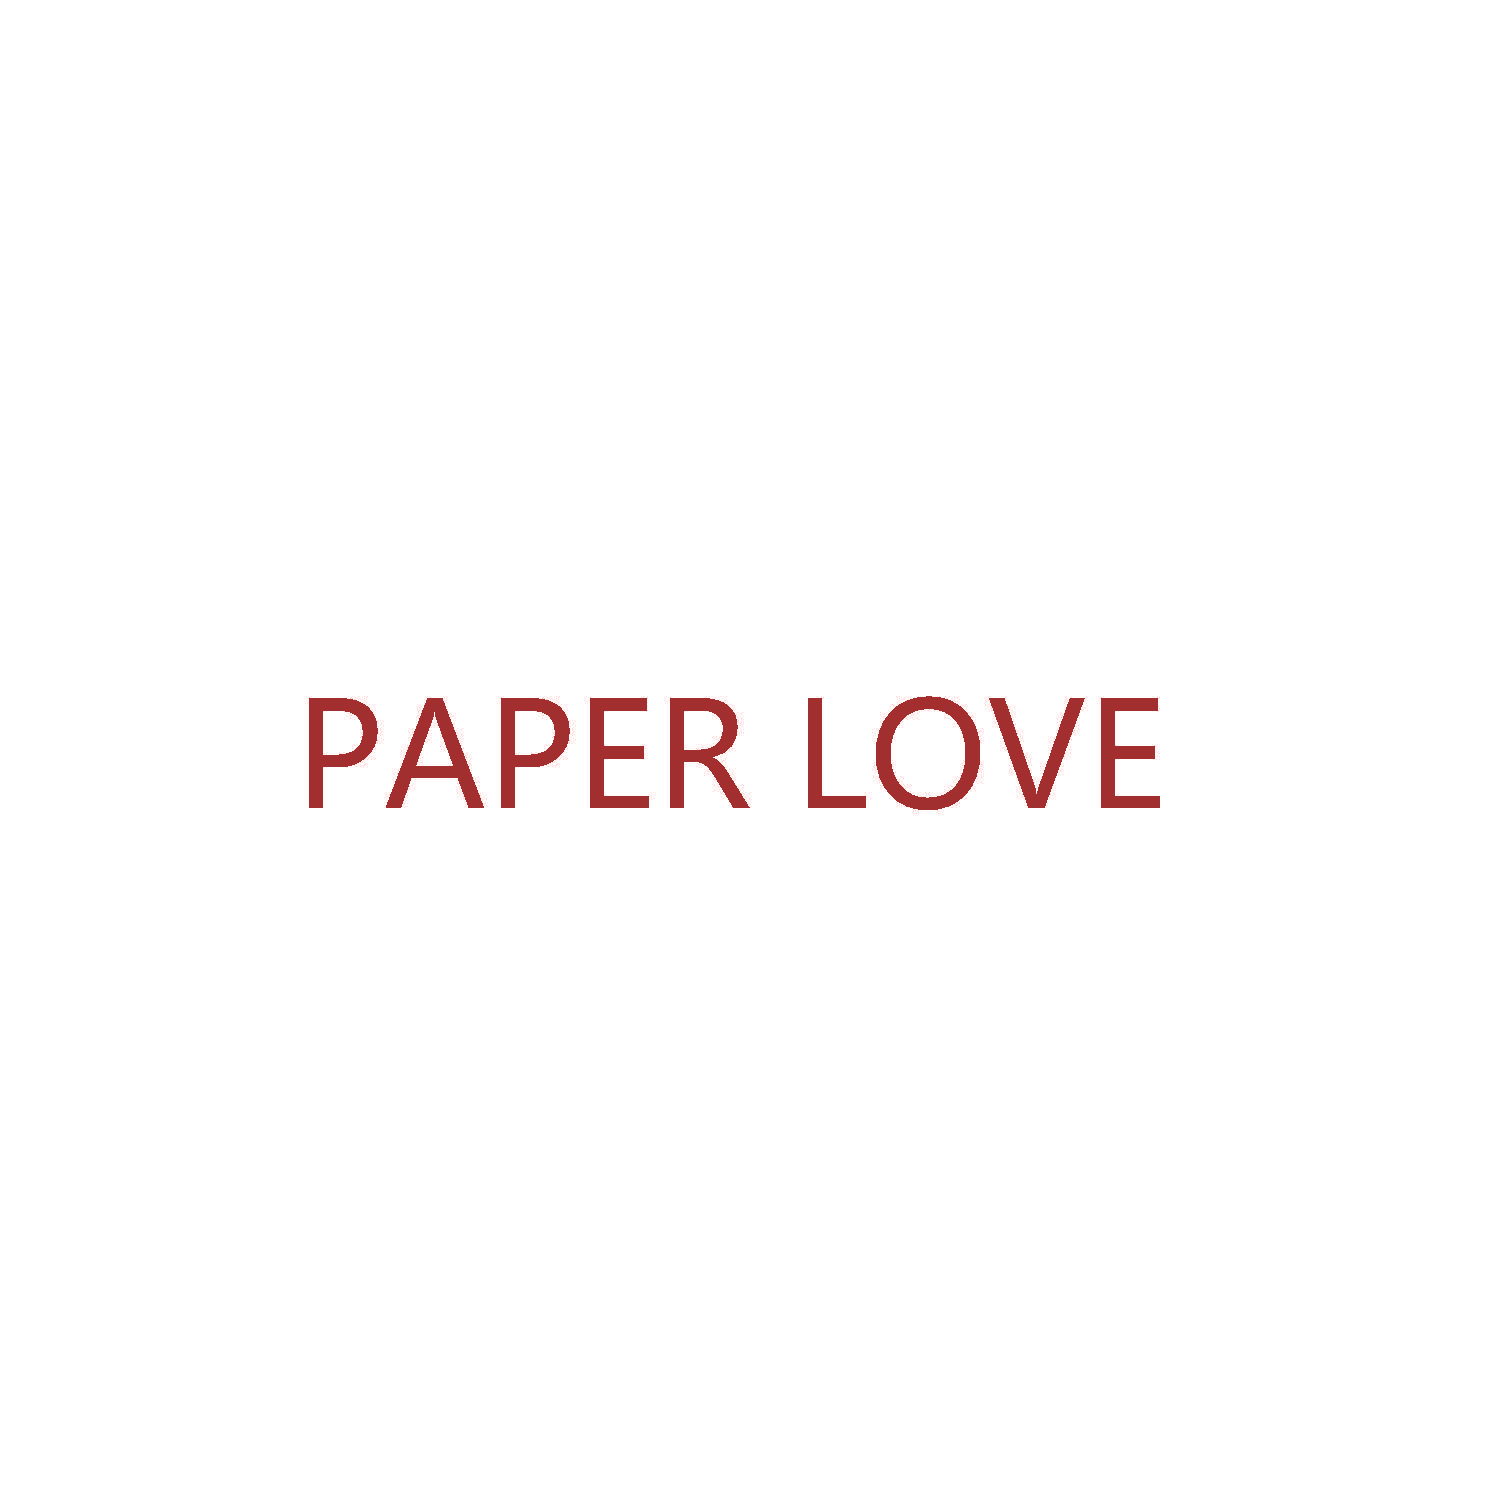 PAPER LOVE